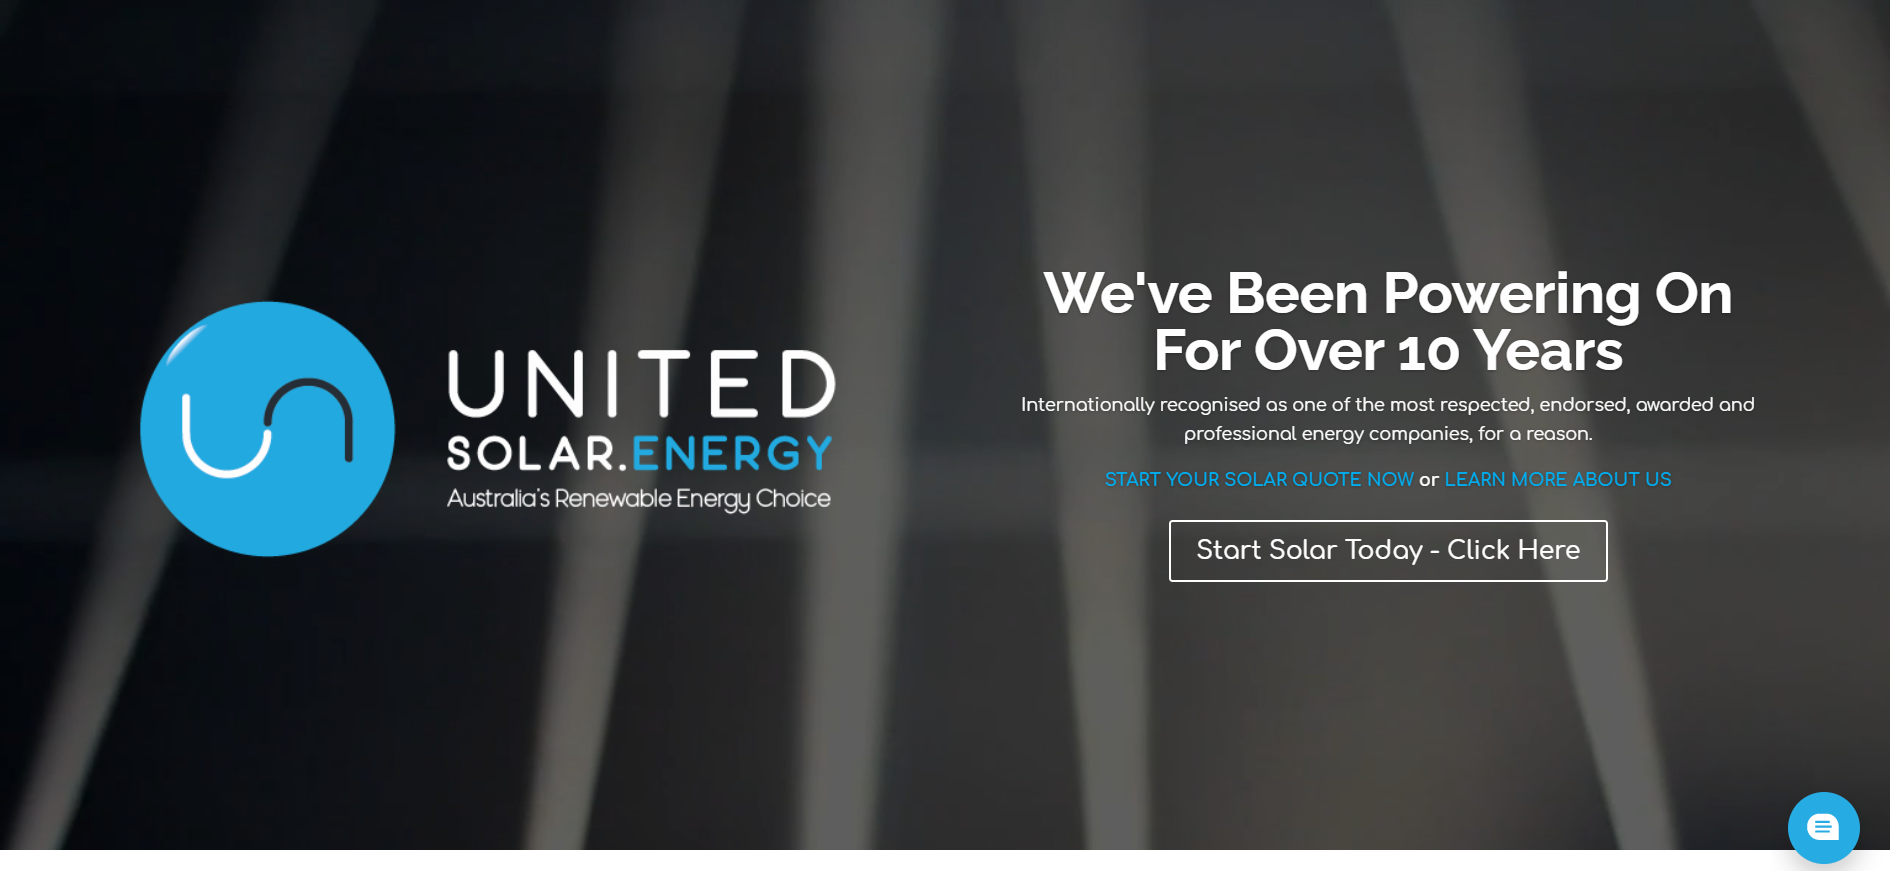 United Solar Energy